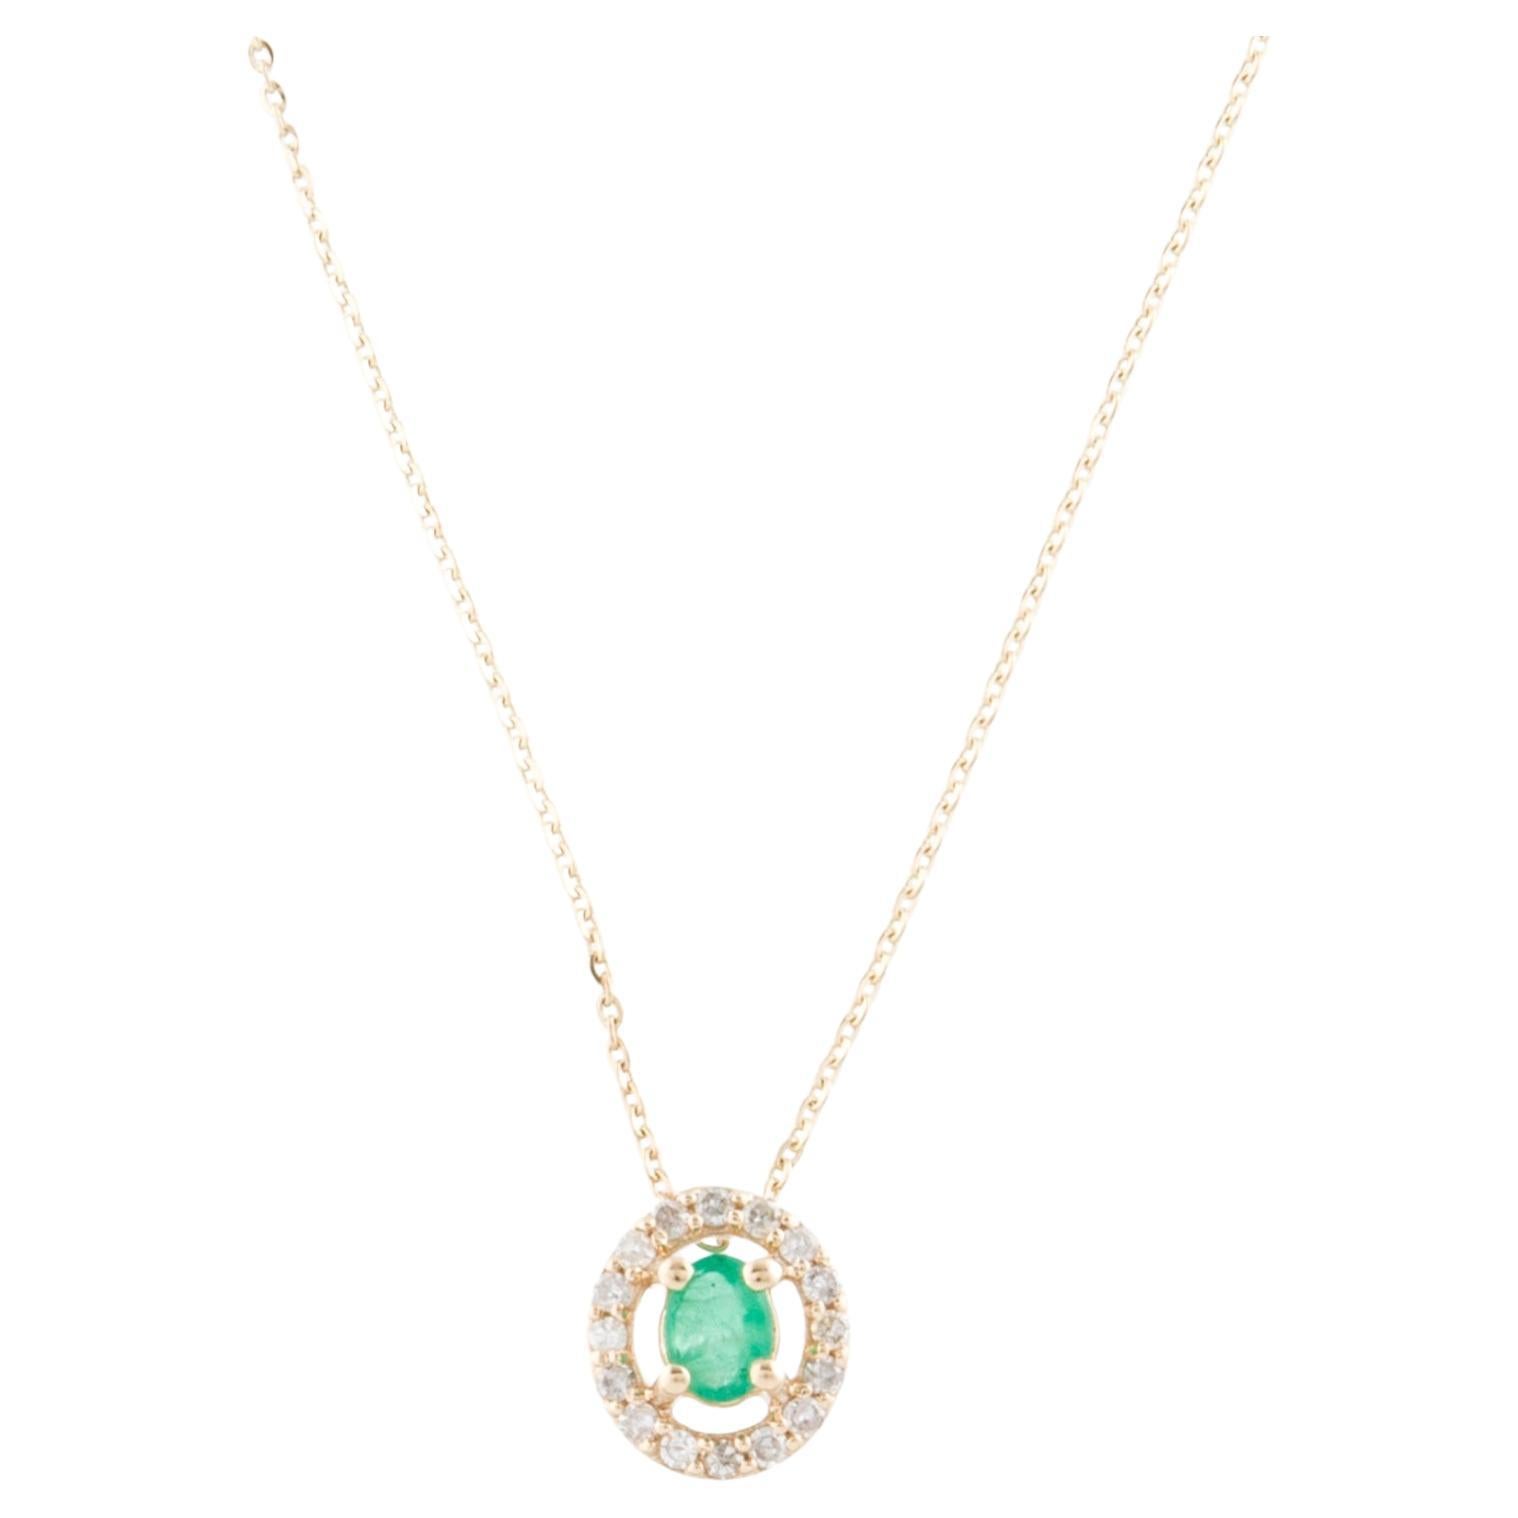 14K Emerald & Diamond Pendant Necklace: Exquisite Luxury Statement Jewelry Piece For Sale